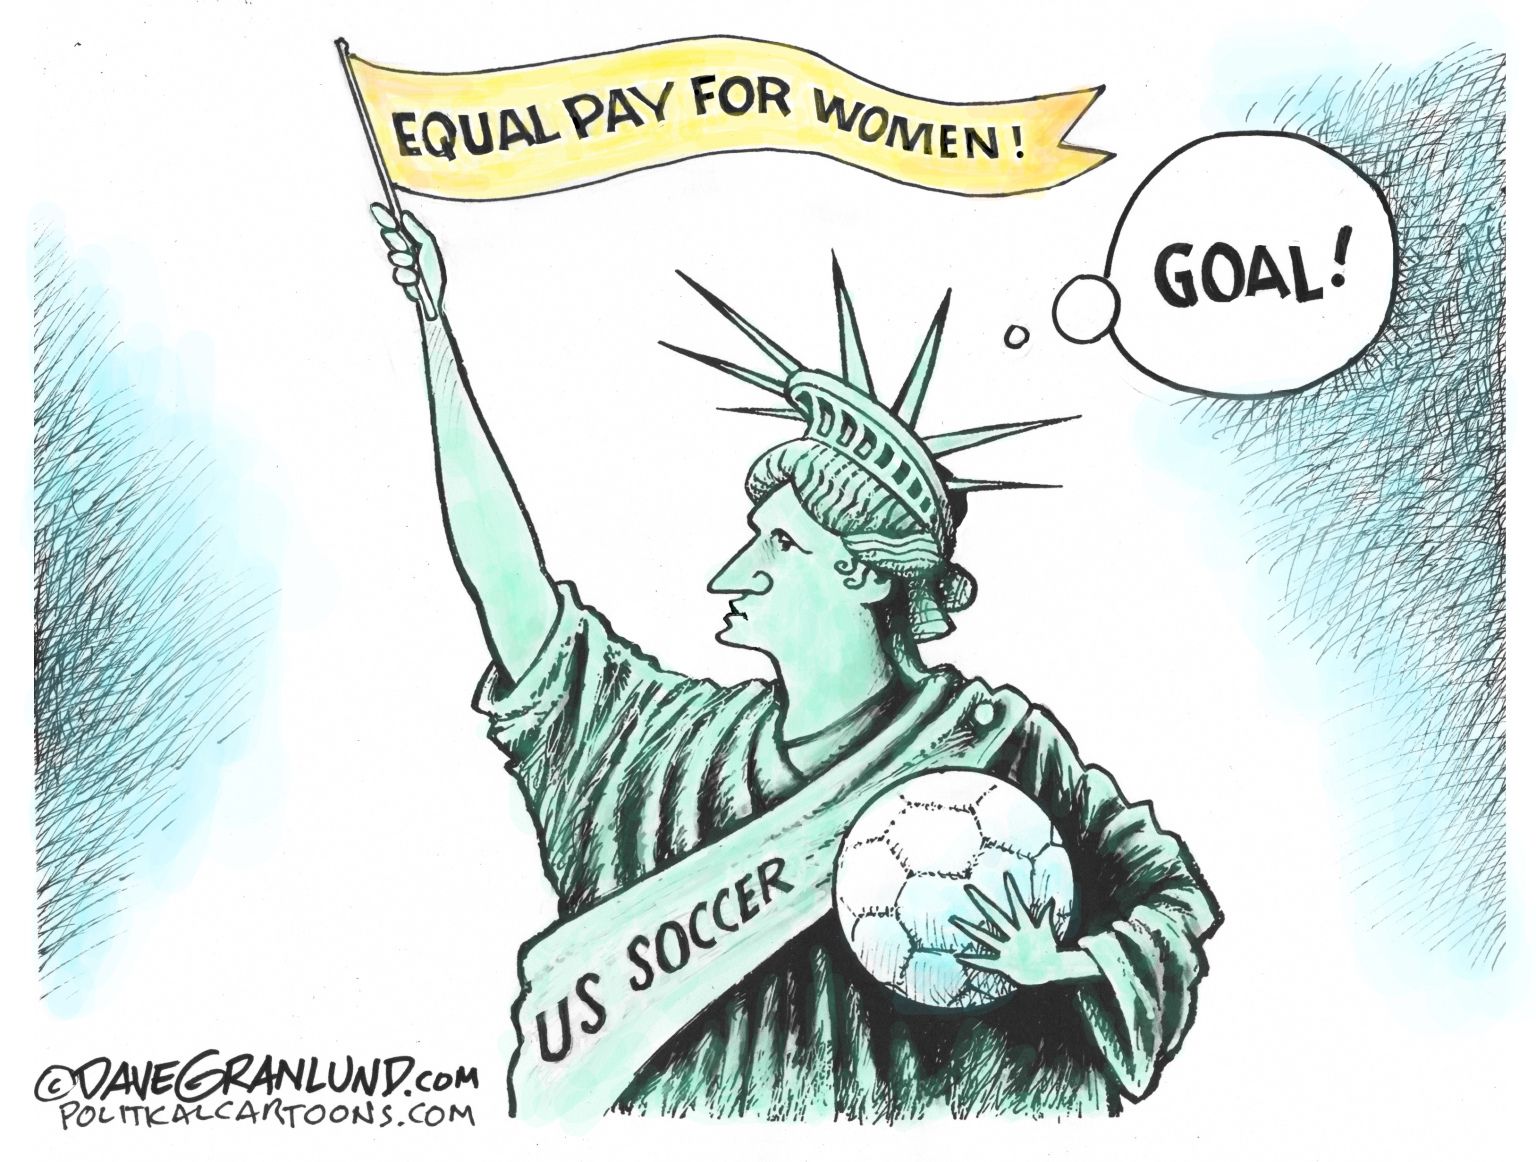 US Women's Soccer equal pay - News JustIN Political Cartoon - newsjustin.press